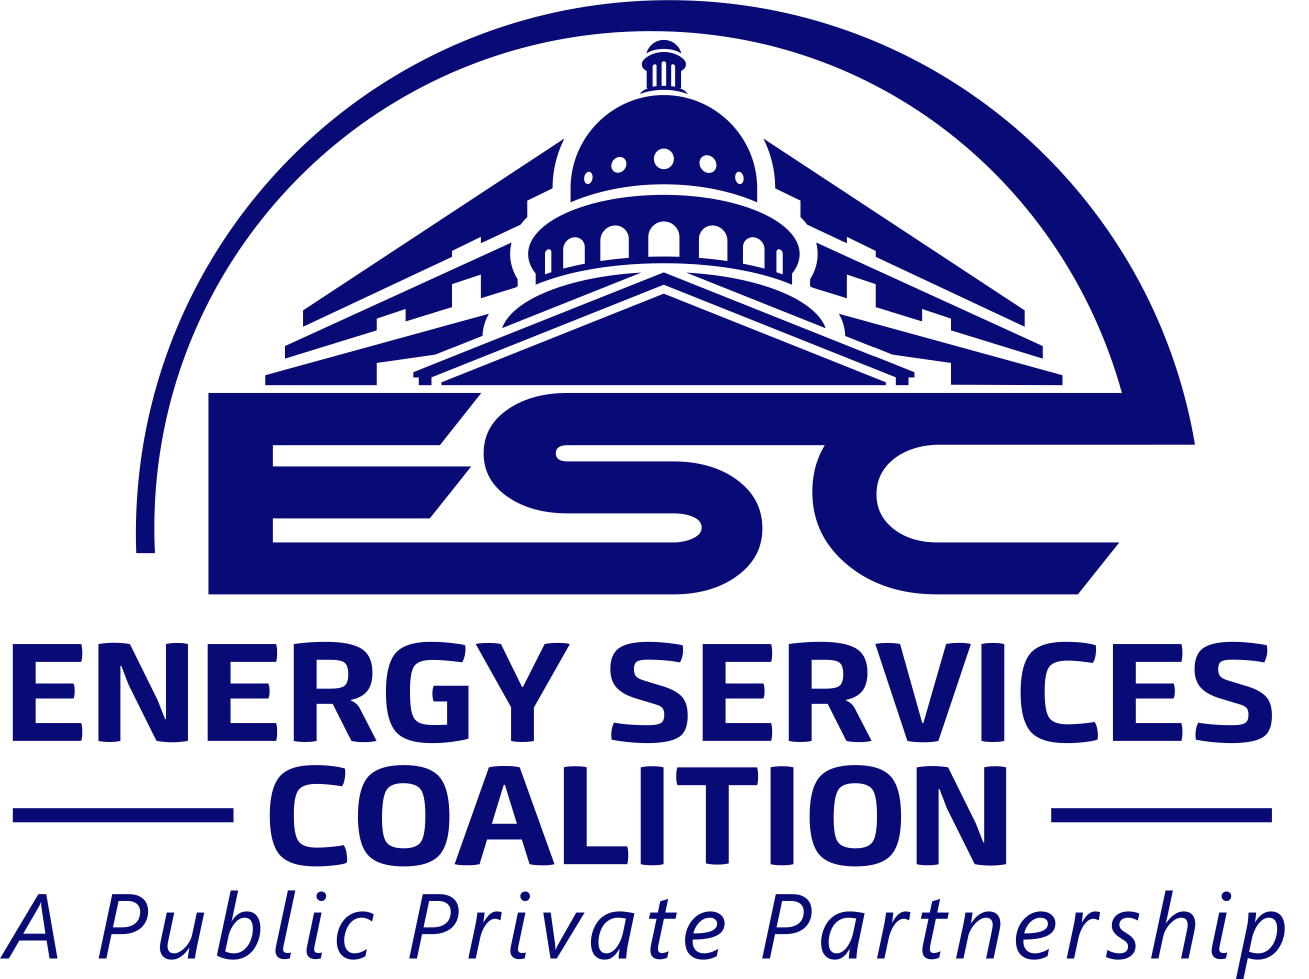 CxEnergy Exhibitors: energy services coalition (ESC)